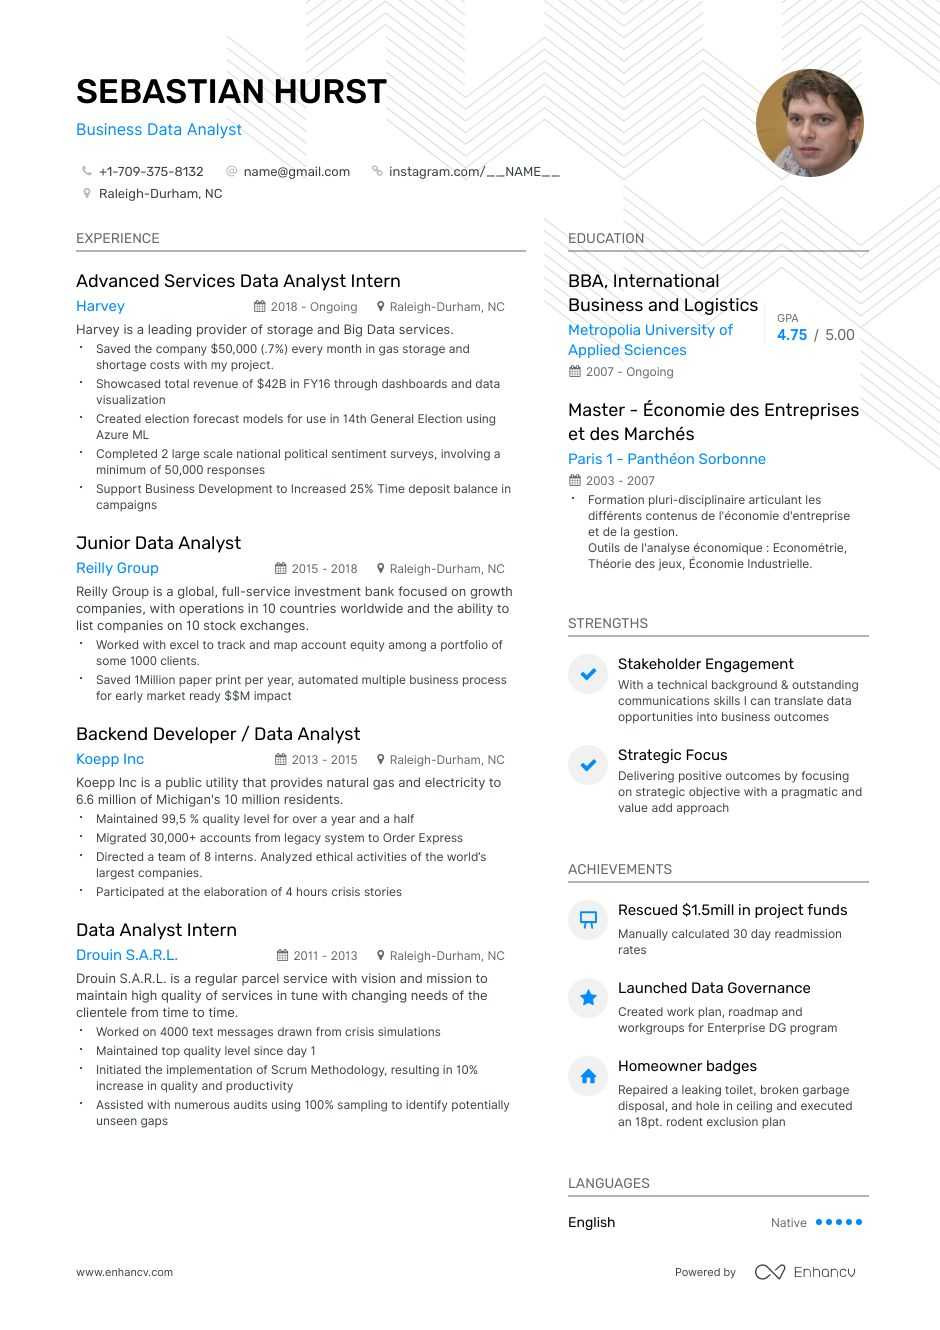 Sample Resume for Data Warehouse Analyst top Business Data Analyst Resume Examples   Expert Tips Enhancv.com